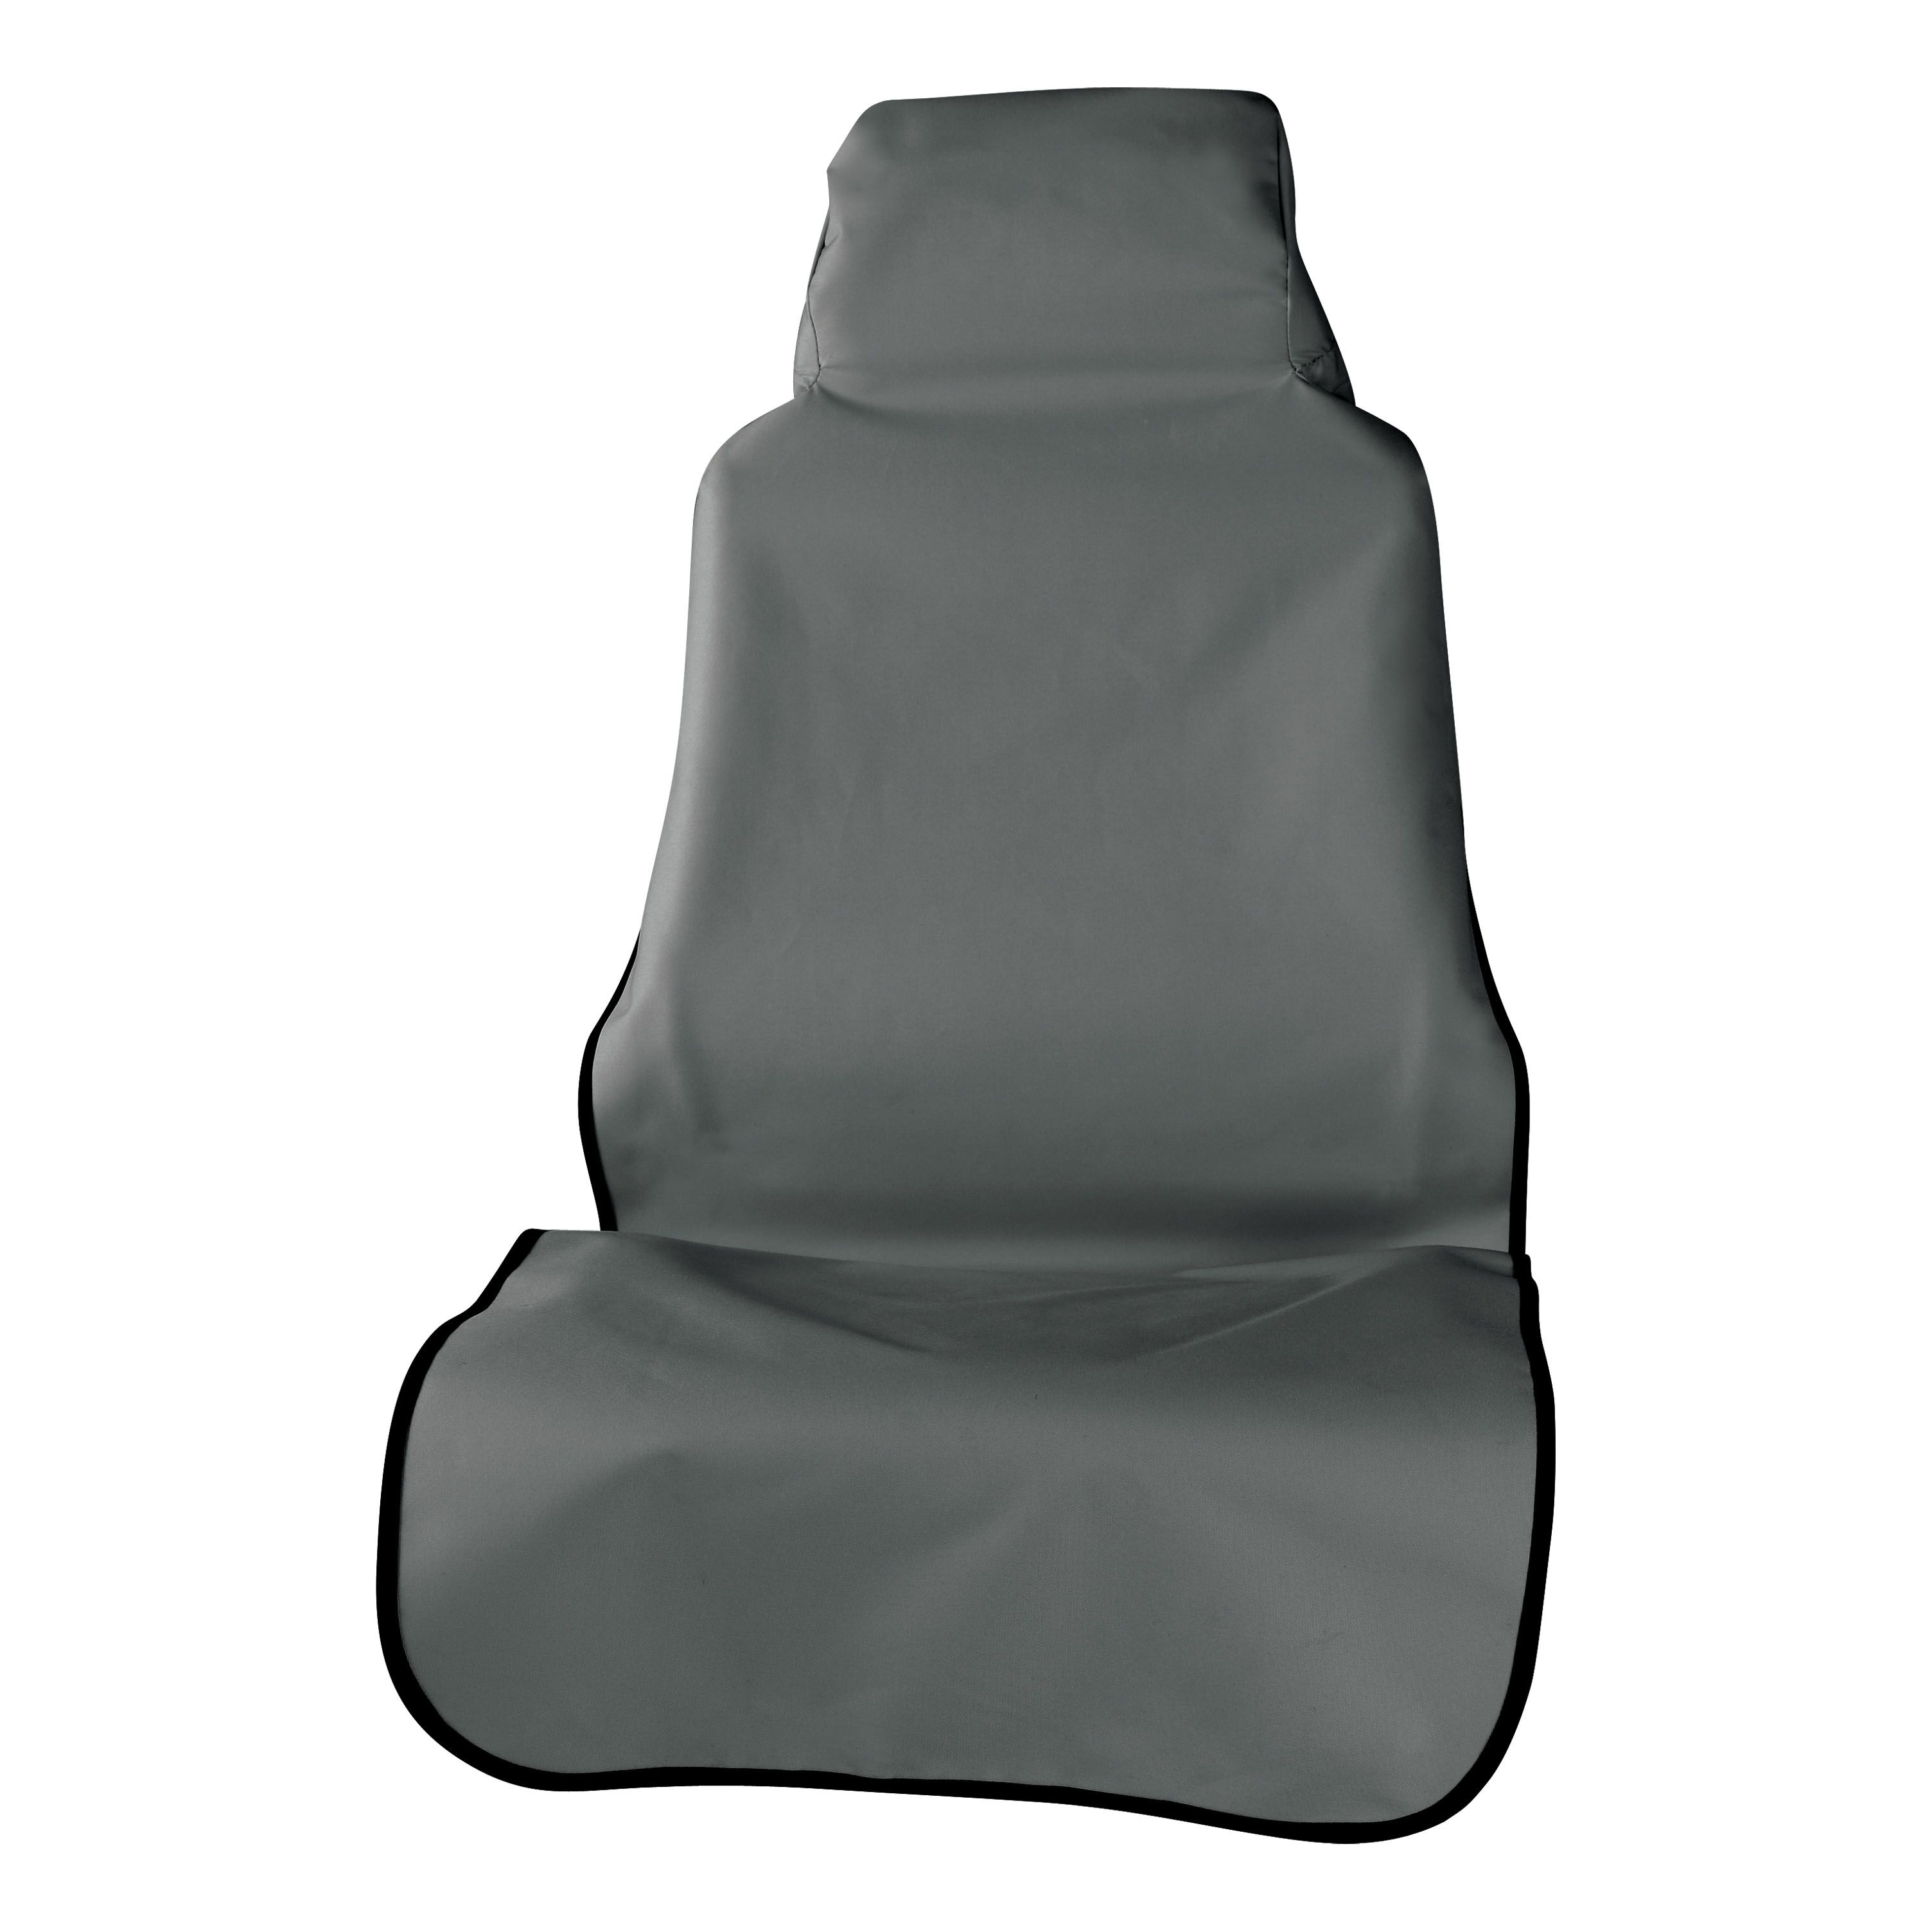 Aries Seat Defender Bucket Seat Cover - Grey